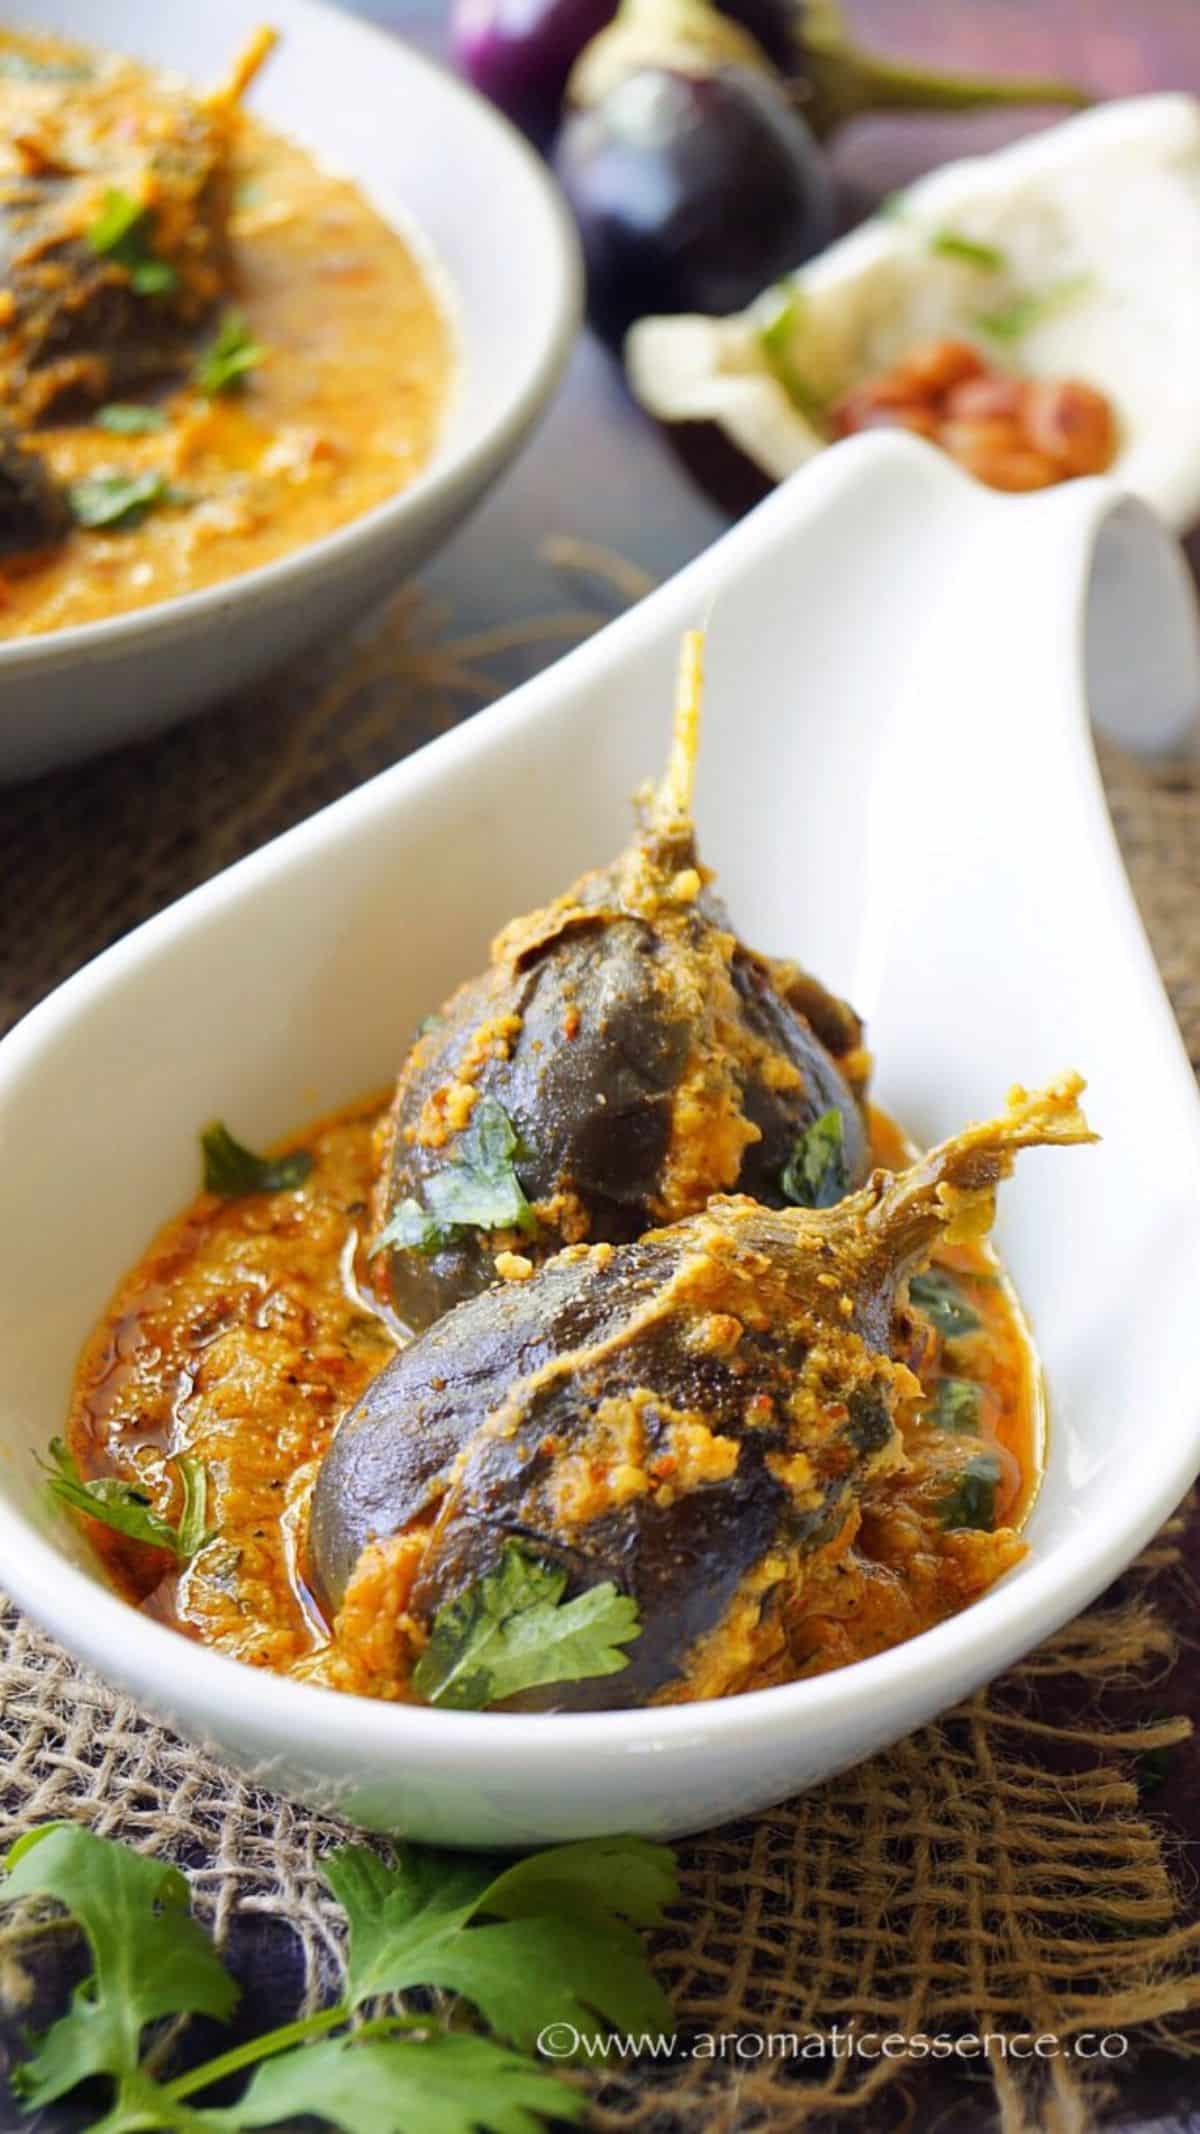 Juicy bharli vangi baby eggplant in a bowl.